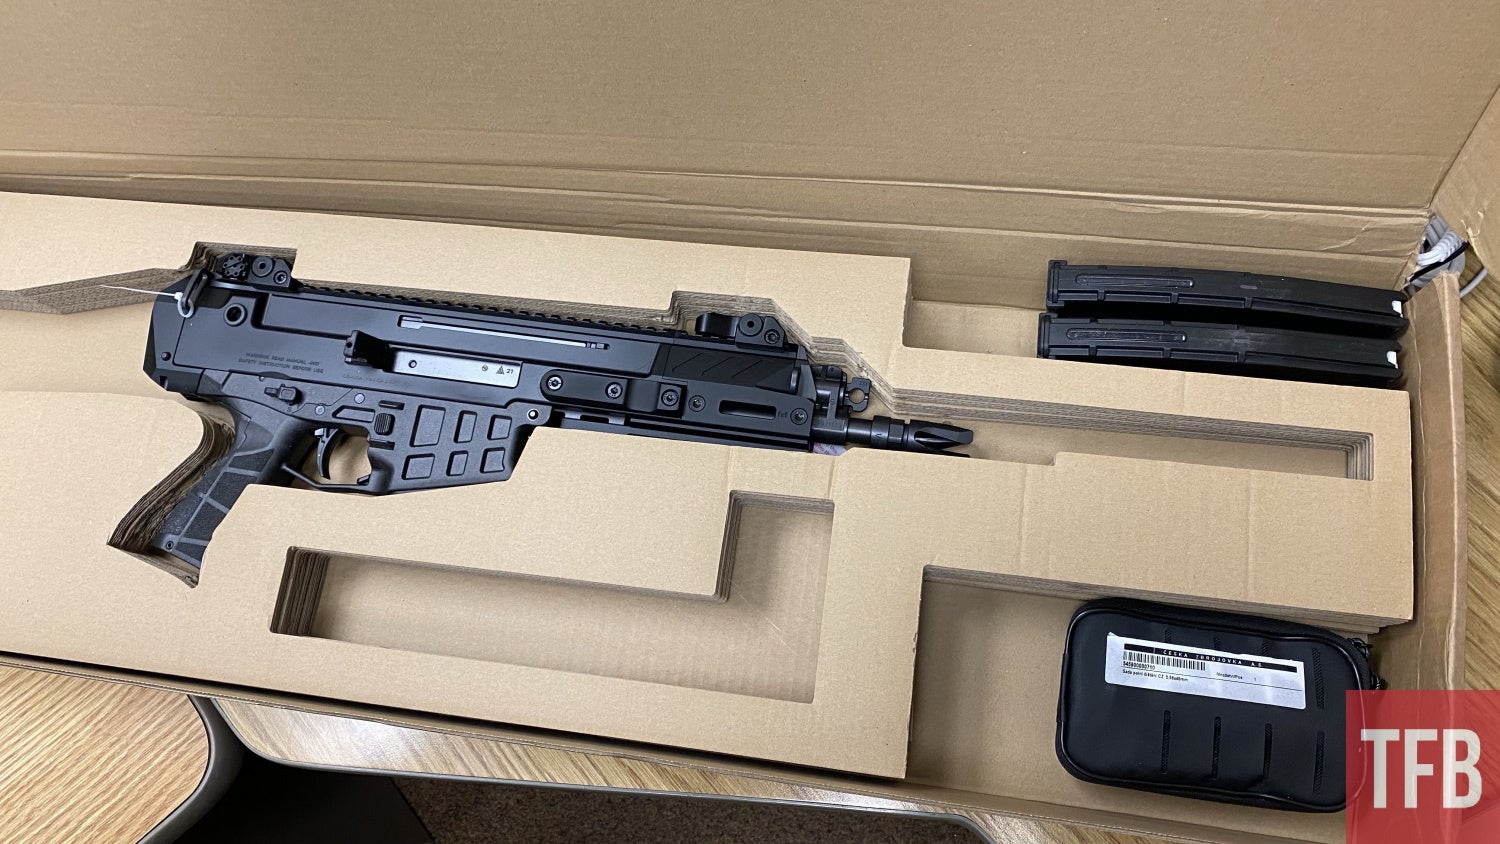 TFB Review: CZ's New Bren 2 MS Pistol